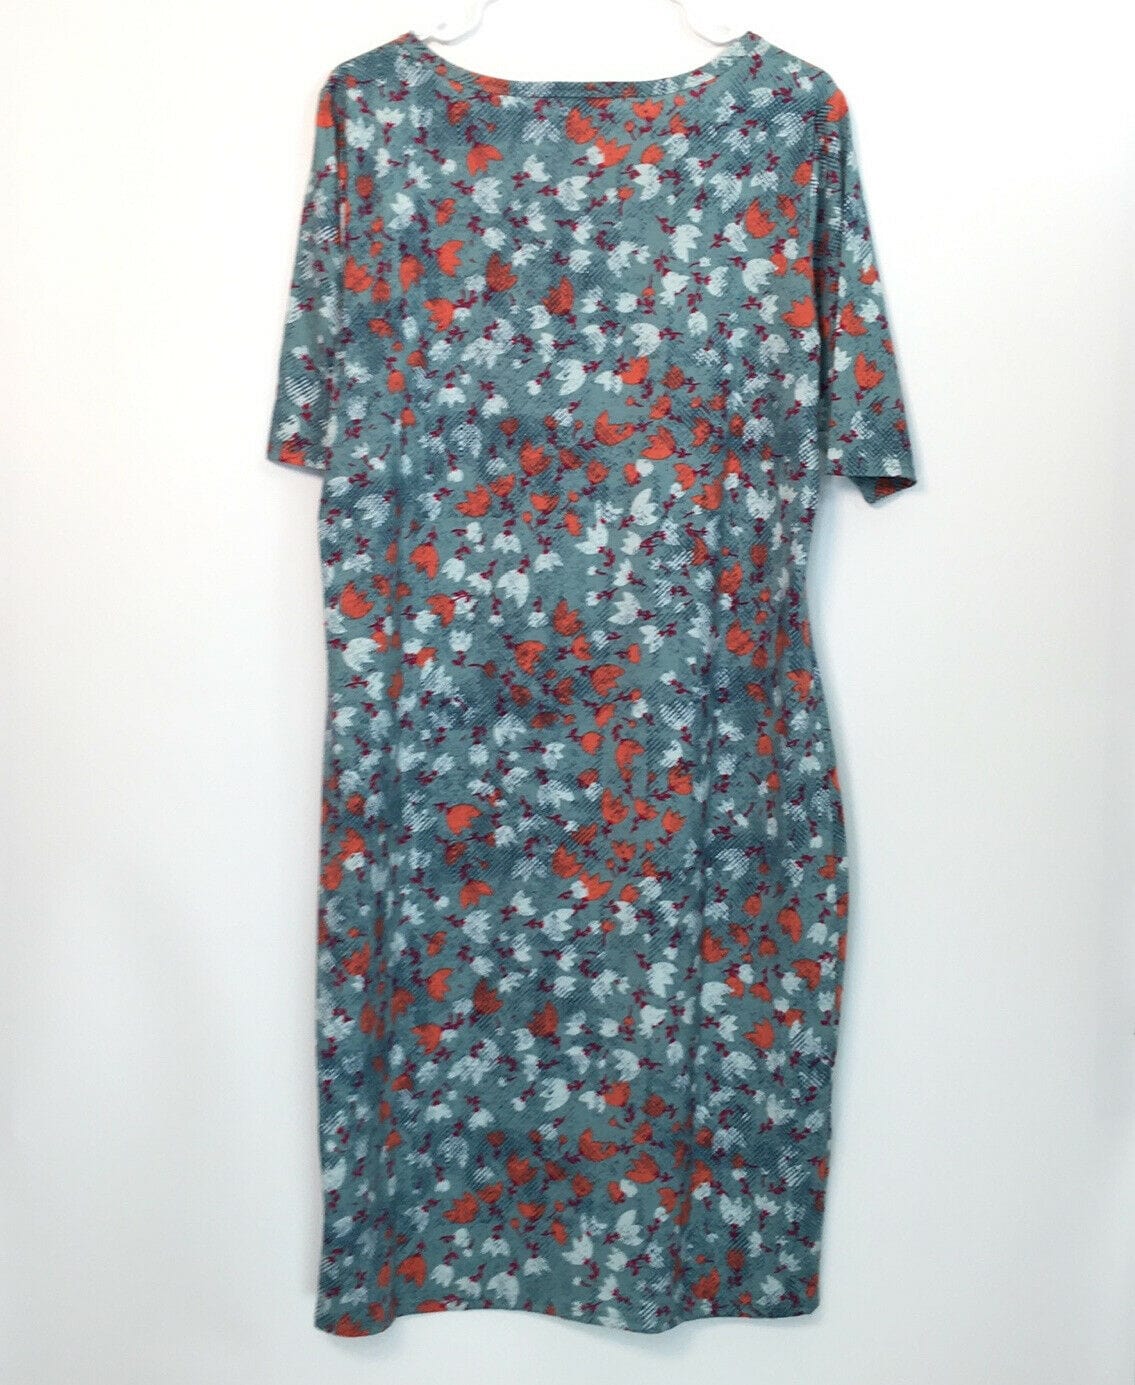 LuLaRoe Womens Size 2XL Blue Floral Print Julia Dress Scoop Neck S/s